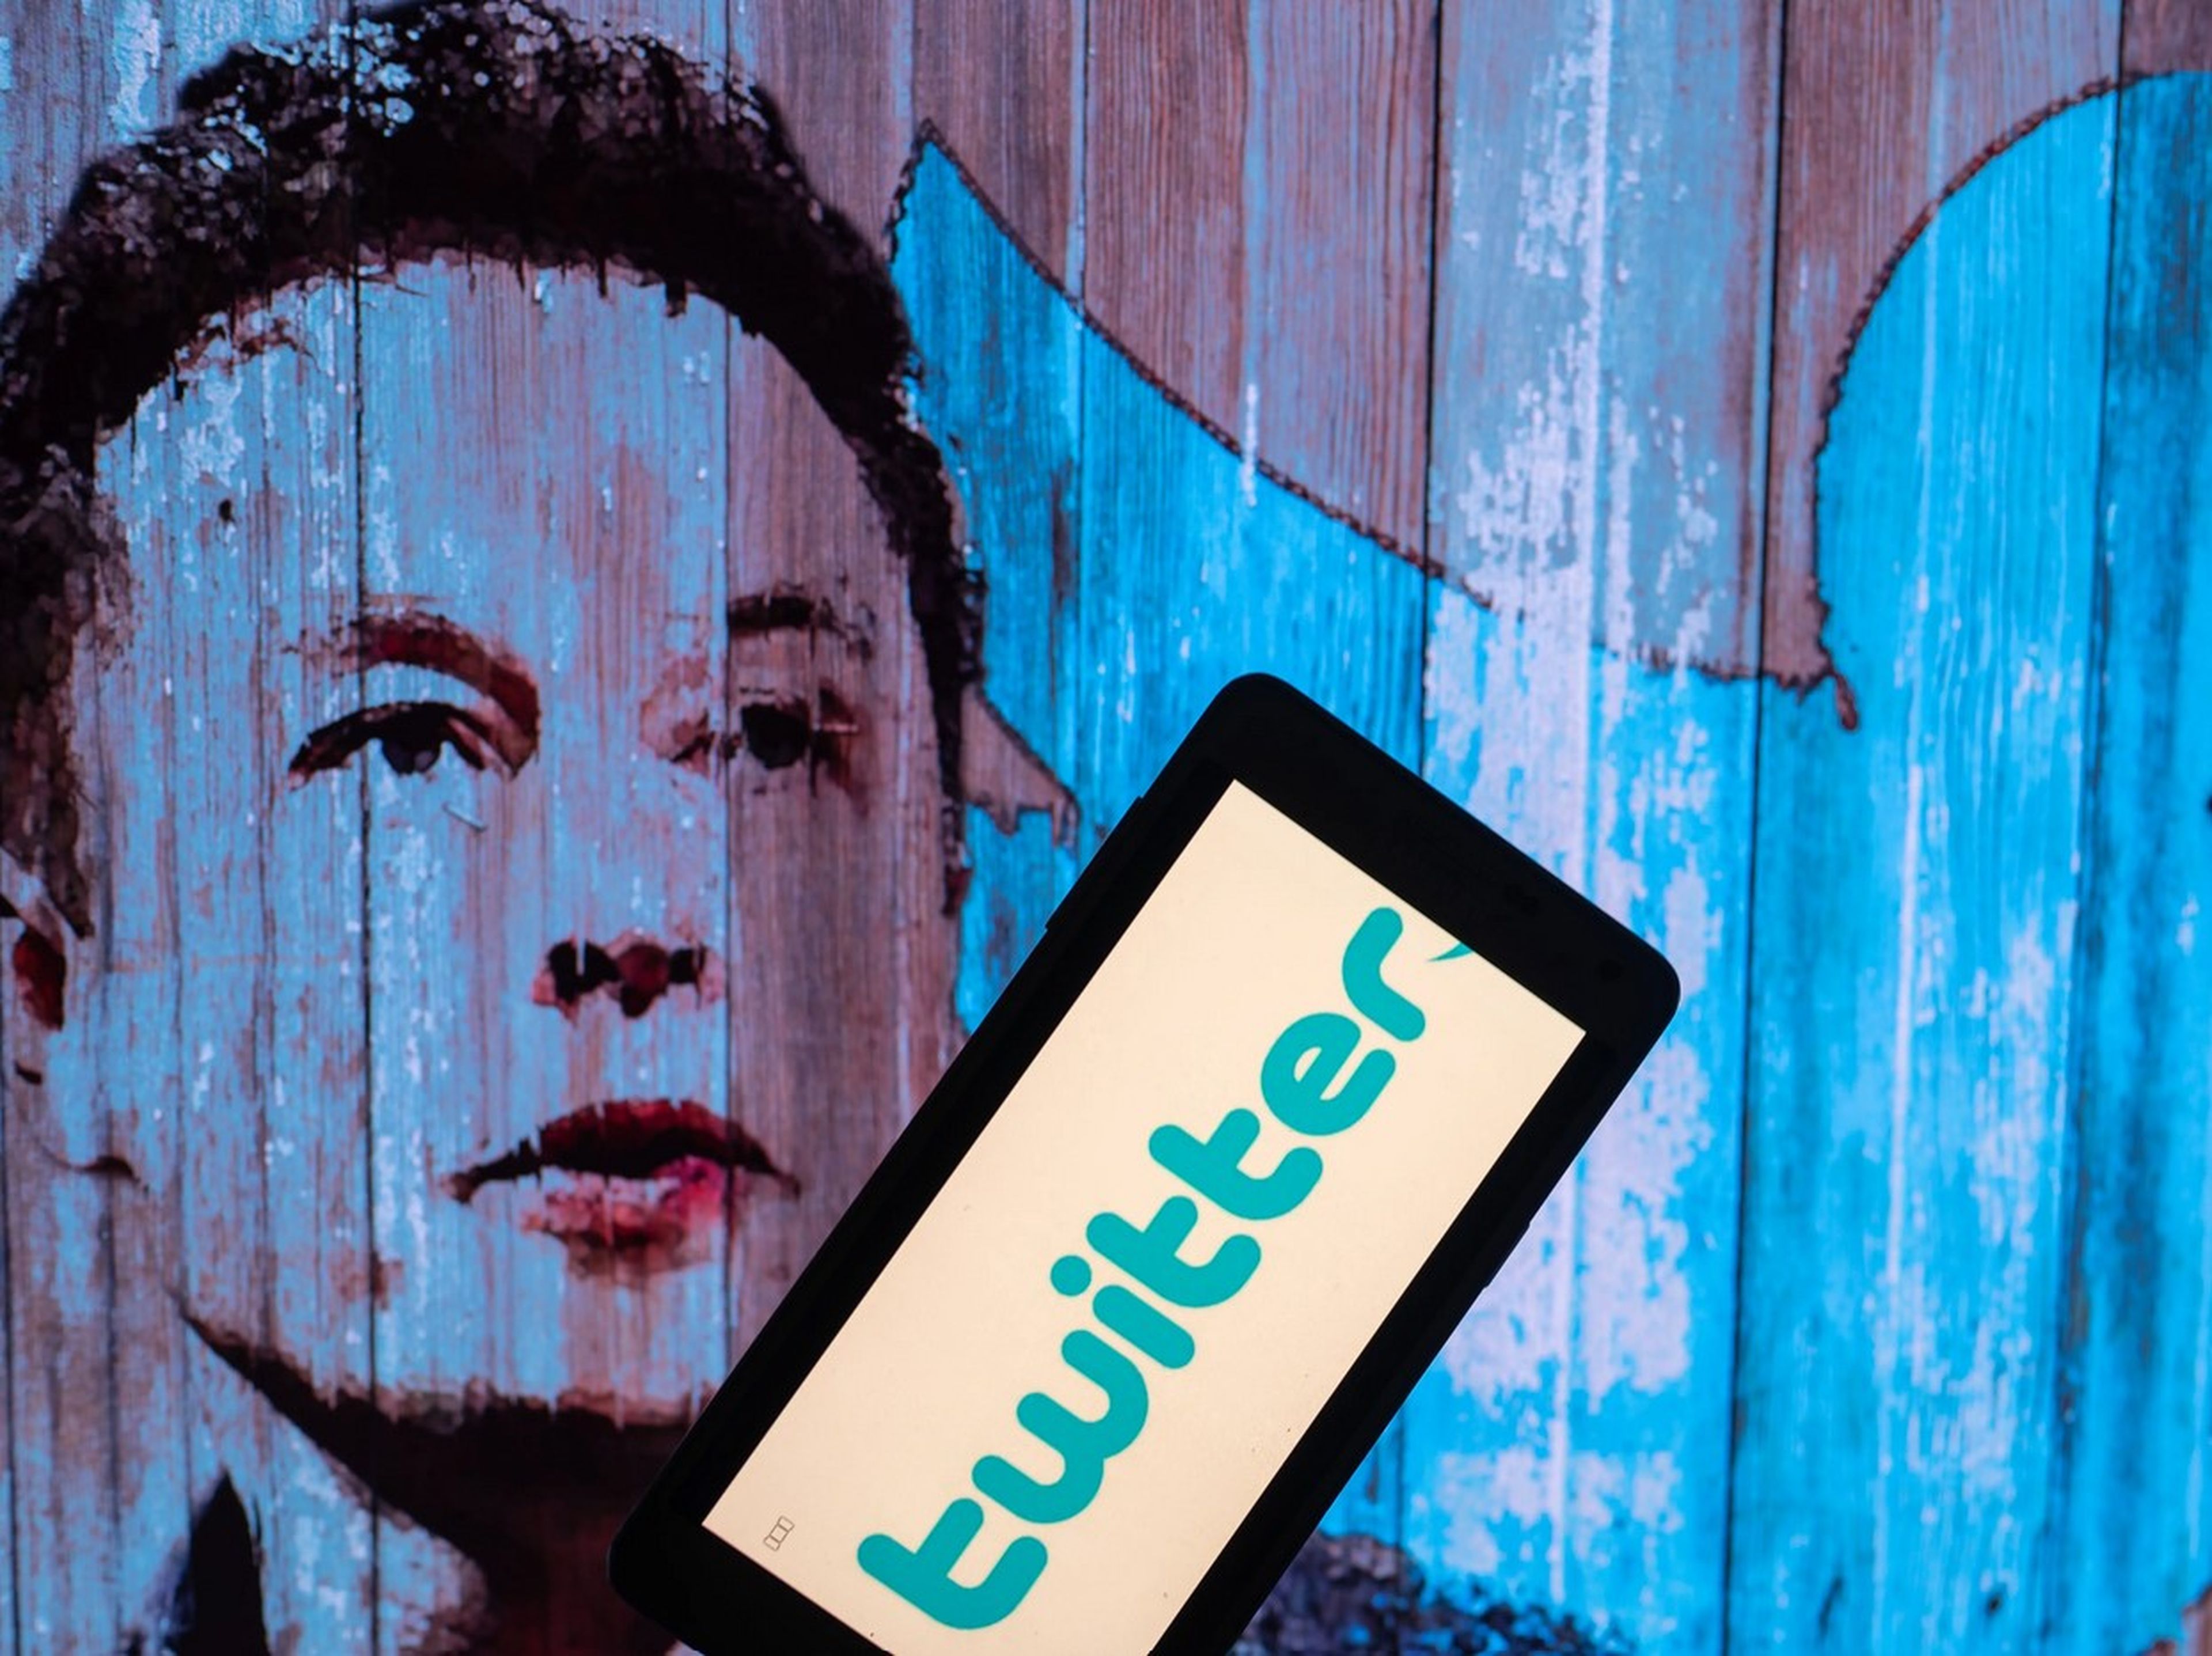 Elon Musk y el logo de Twitter.